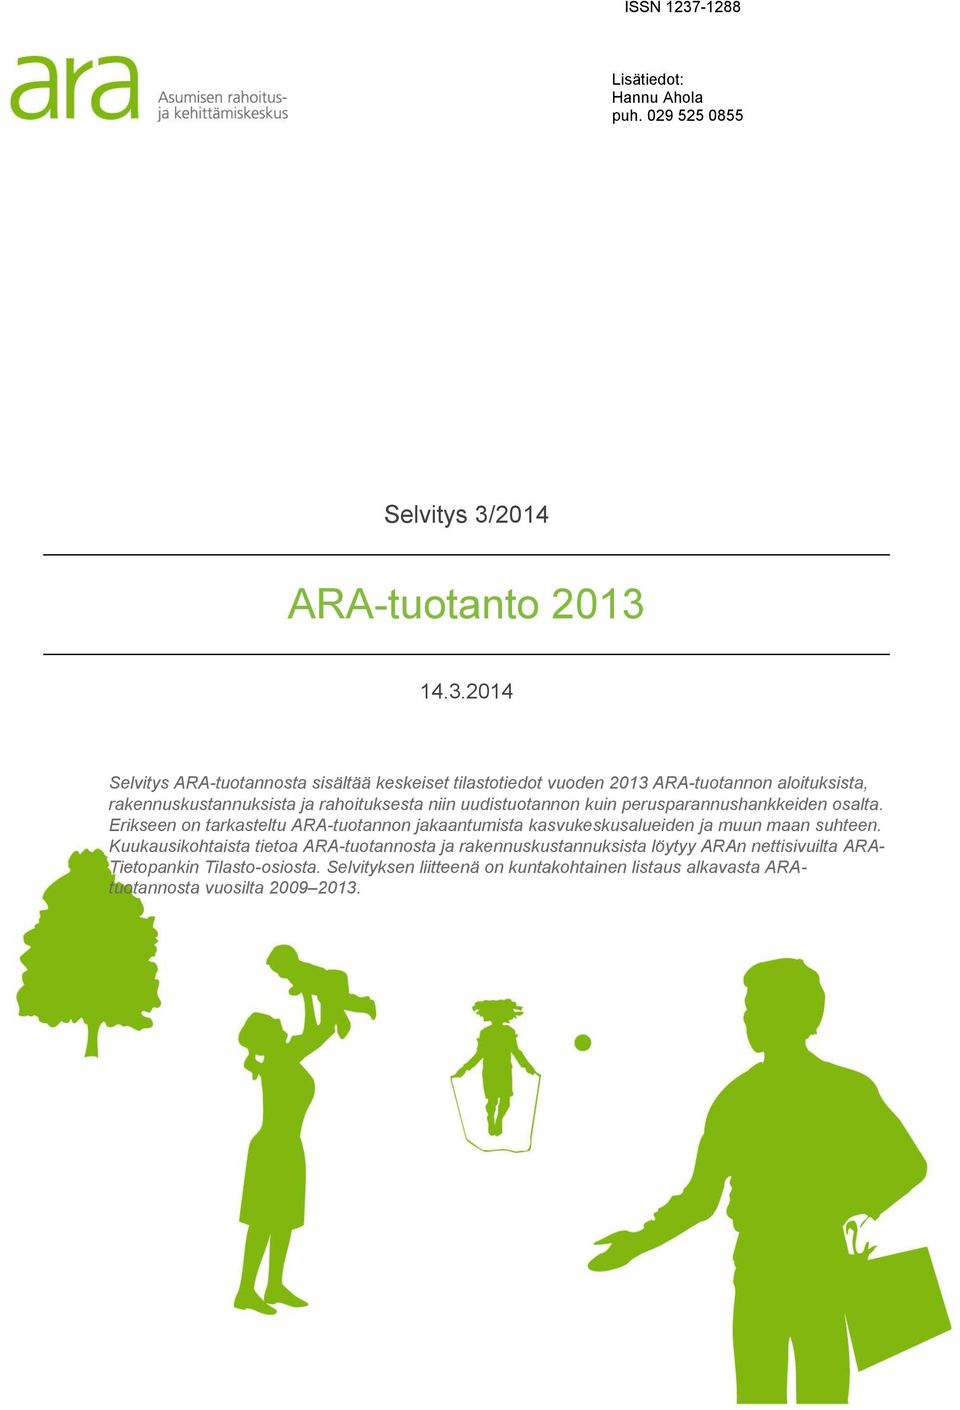 2014 ARA-tuotanto 2013 